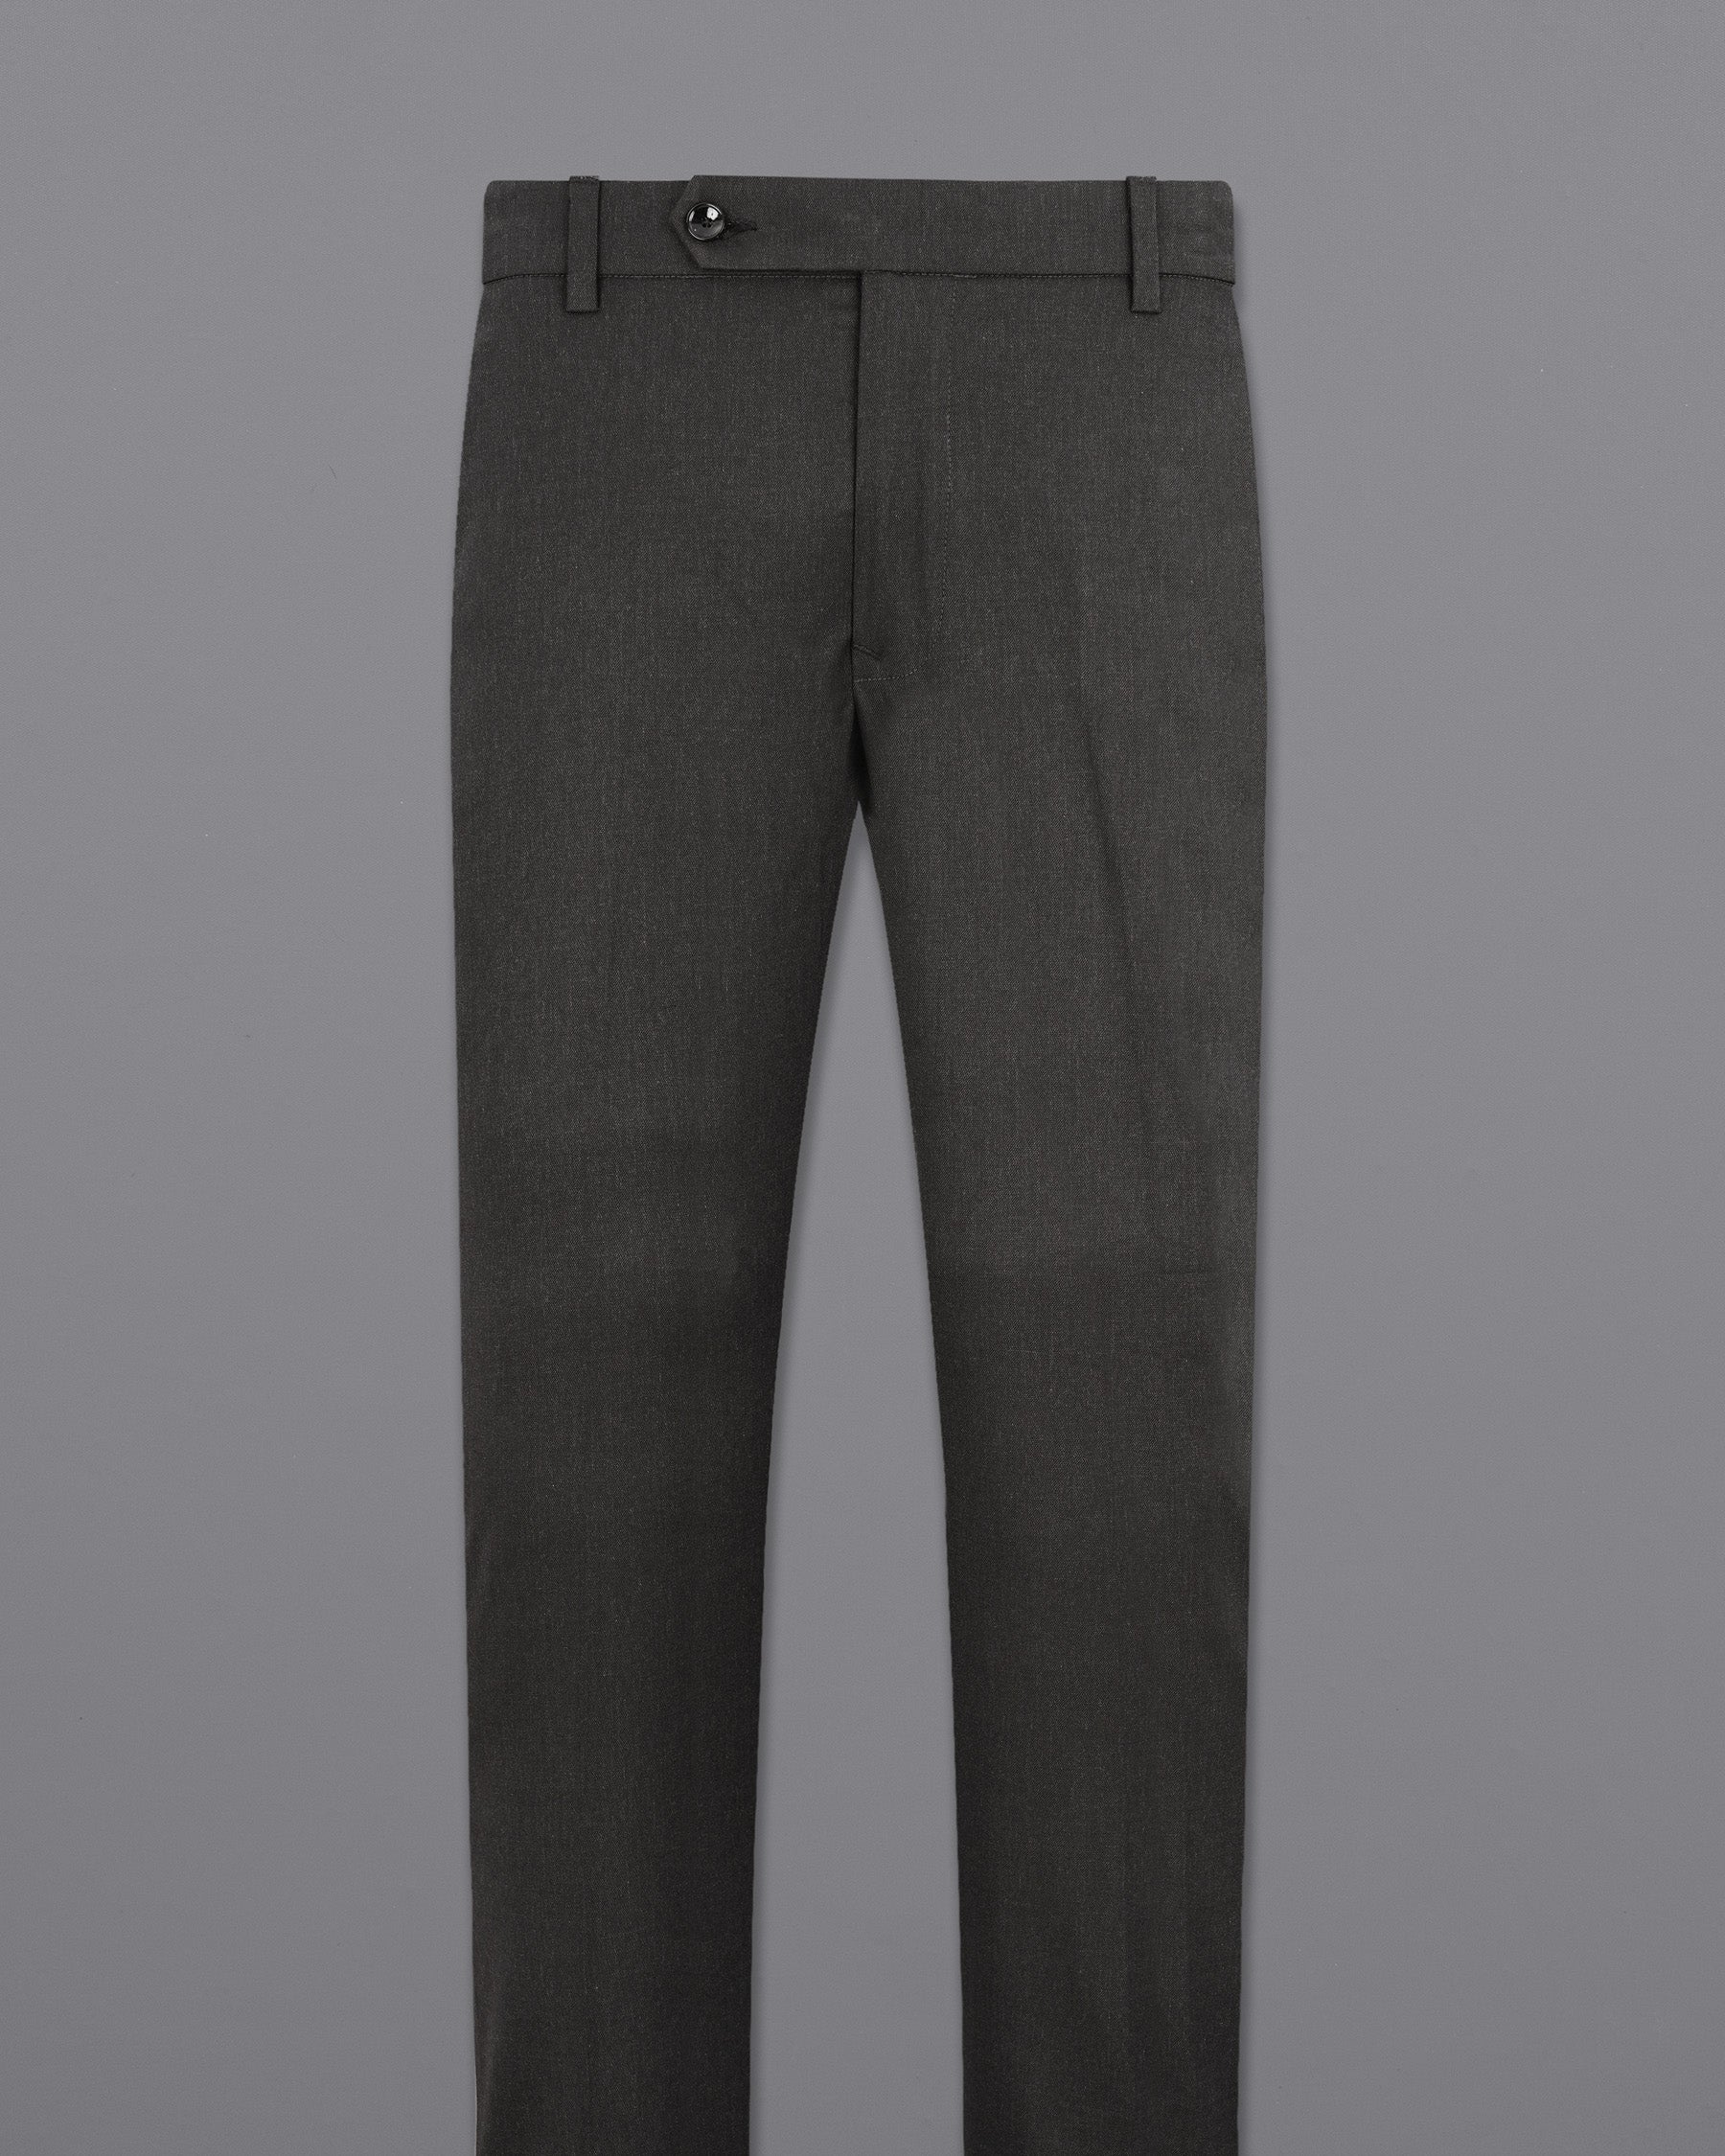 Thunder Gray Cross Placket  Bandhgala Suit